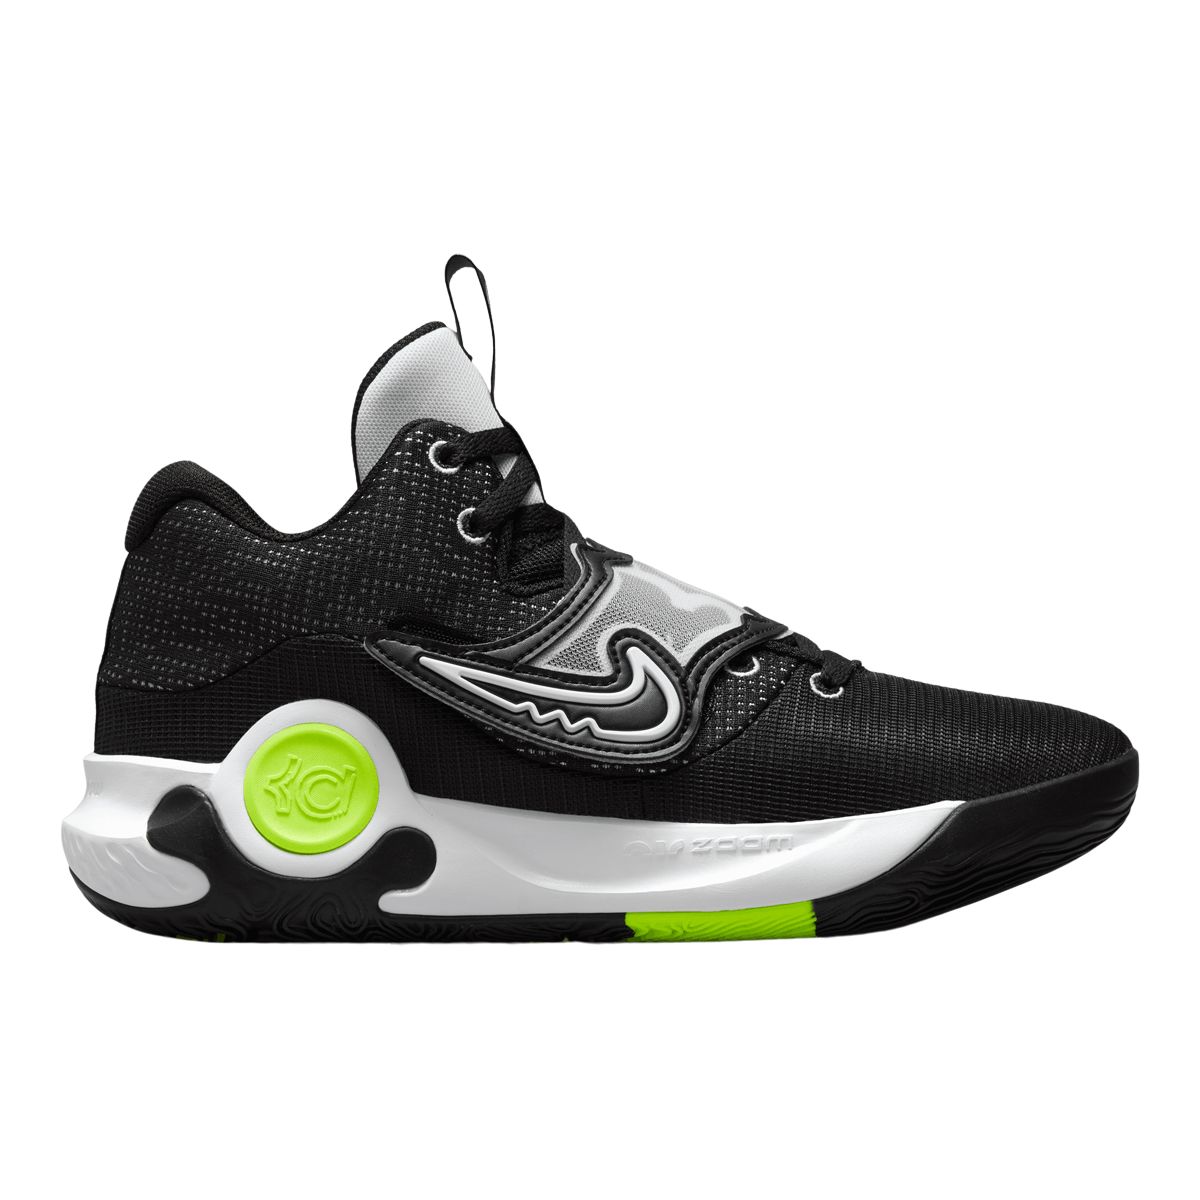 Image of Nike Men's/Women's KD Trey 5 Basketball Shoes